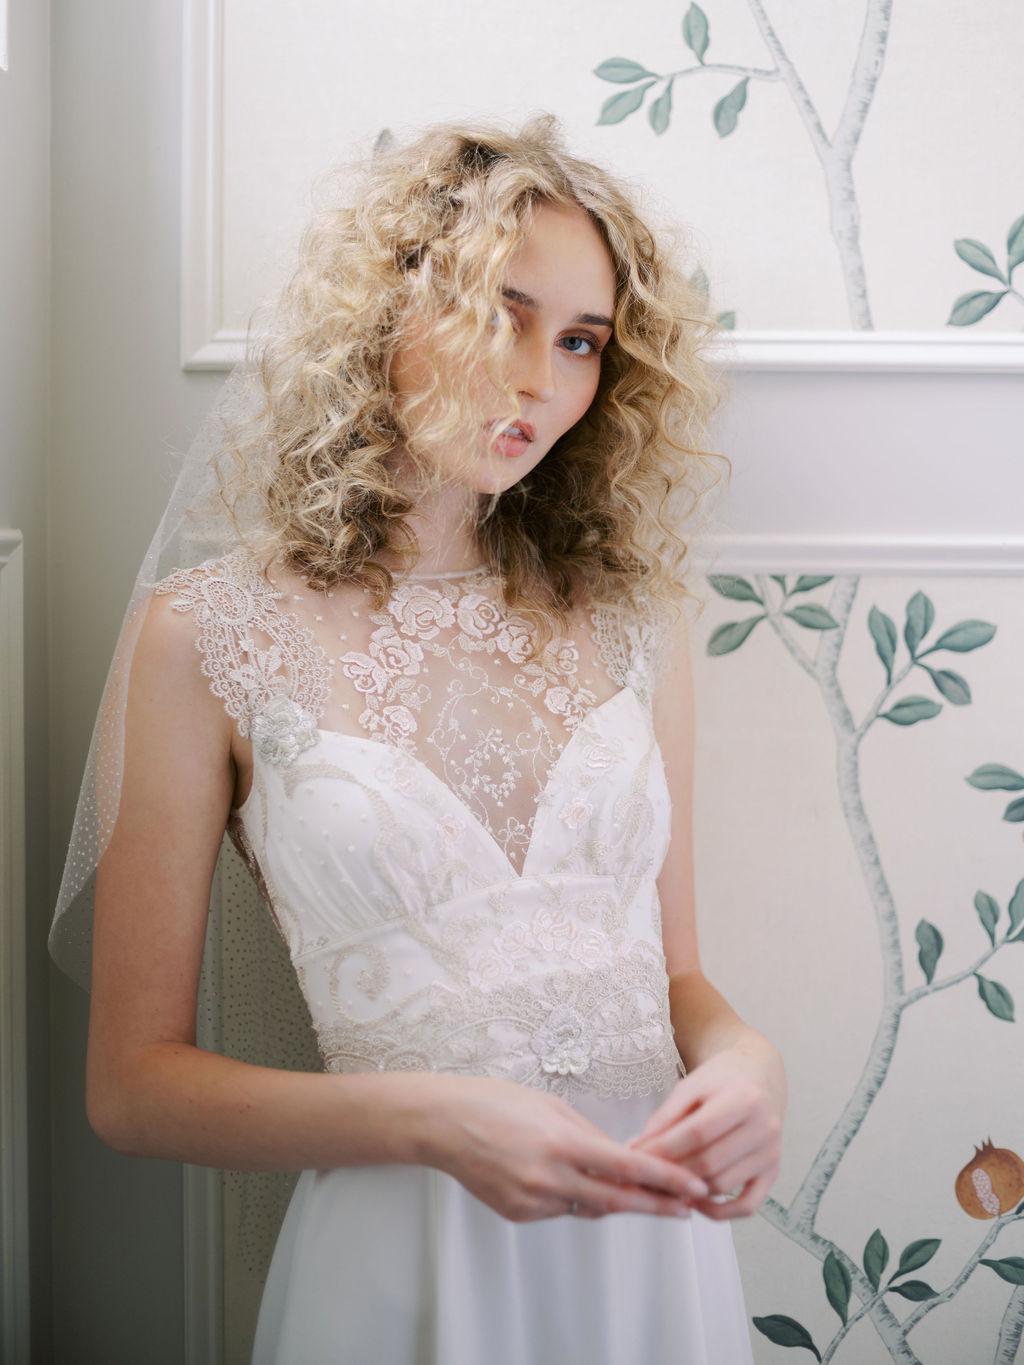 https://cdn0.weddingwire.com/article/7843/original/1280/jpg/3487-2-shoulder-flyaway-claire-pettibone-wedding-veil-styles.jpeg